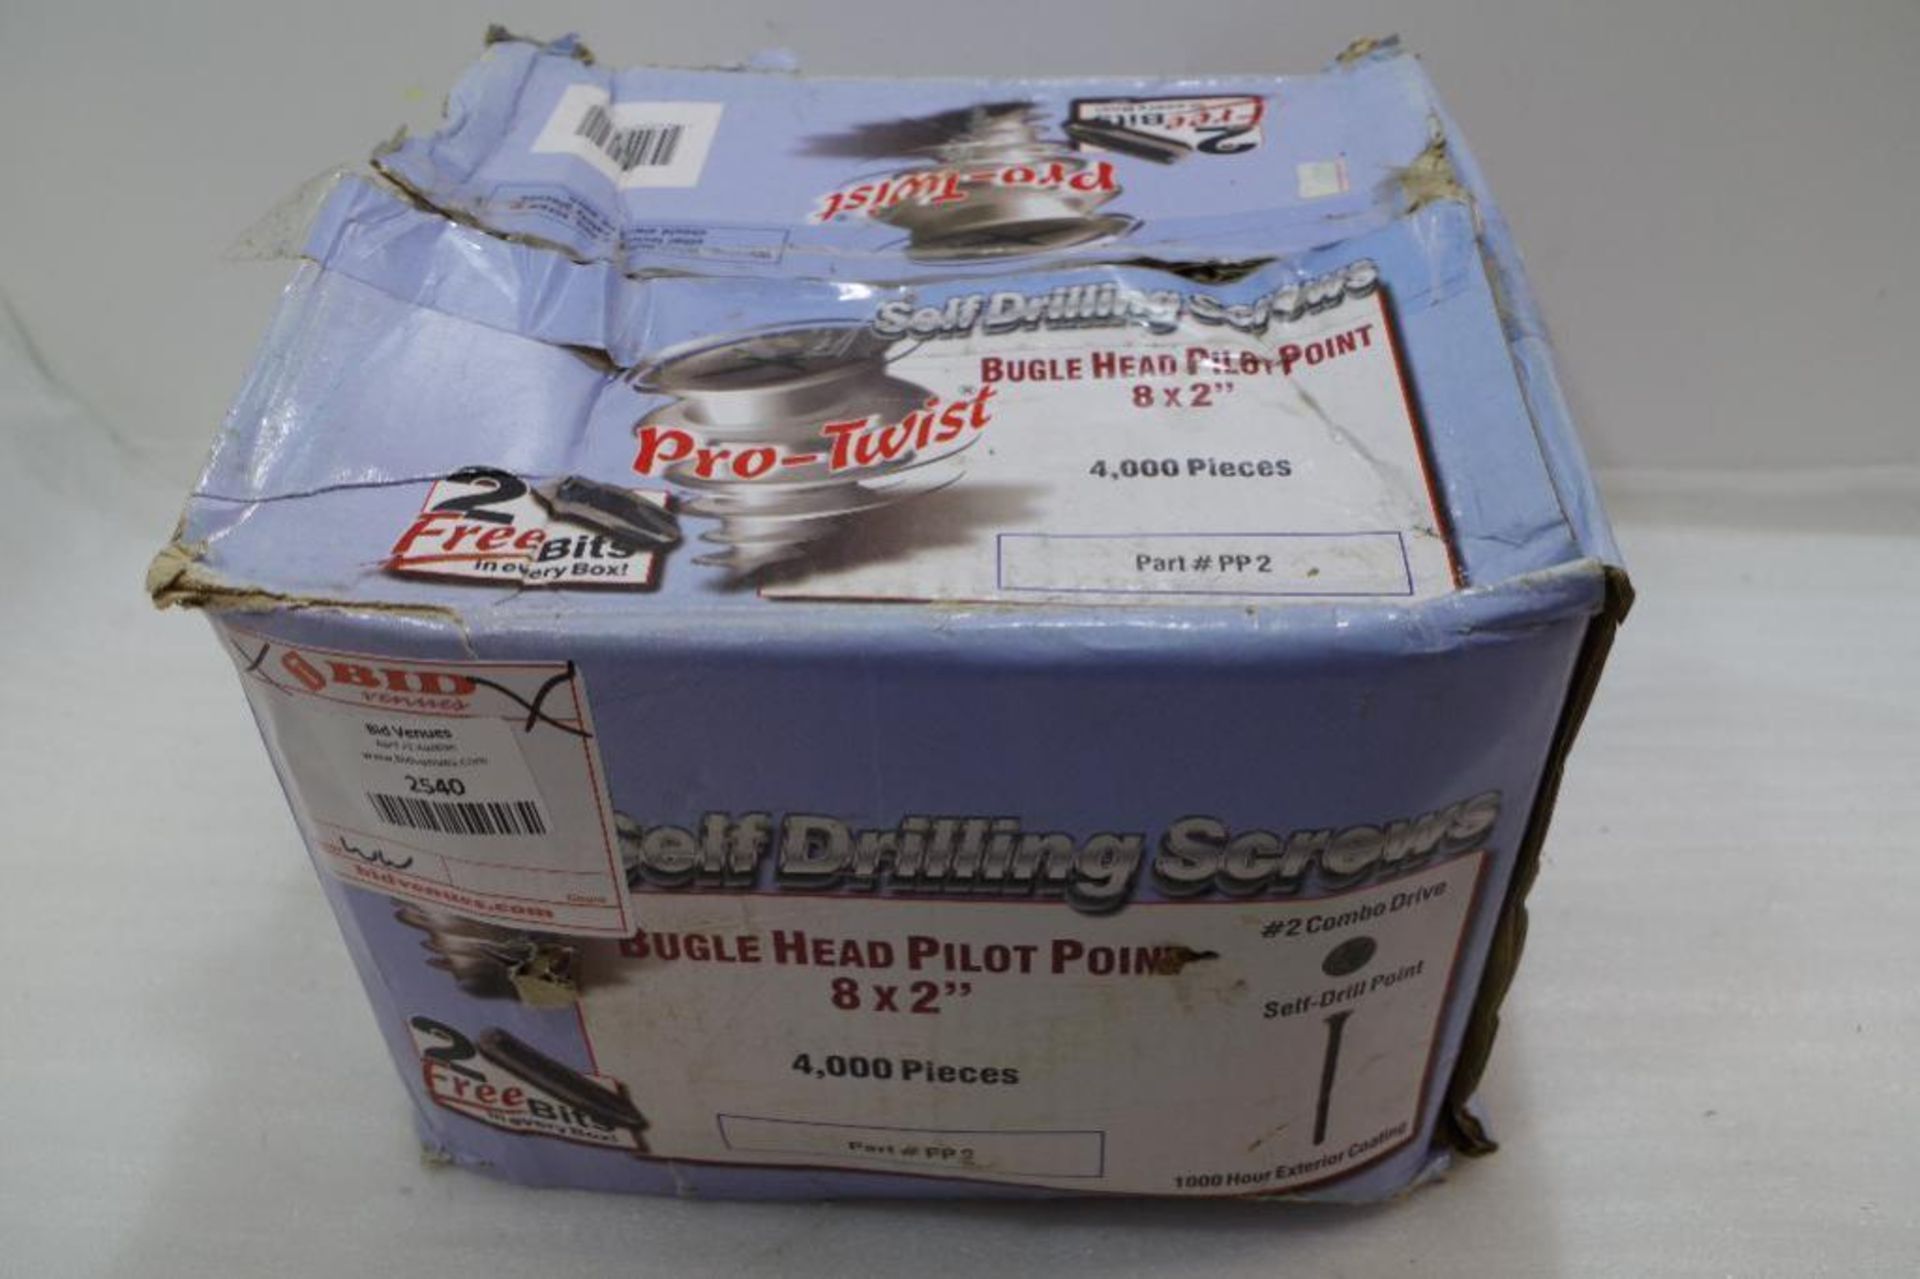 Box of PRO TWIST Self Drilling Screws Bugle Head Pilot Point 8 x 2" (1 Box of Approx. 4000) - Image 3 of 4